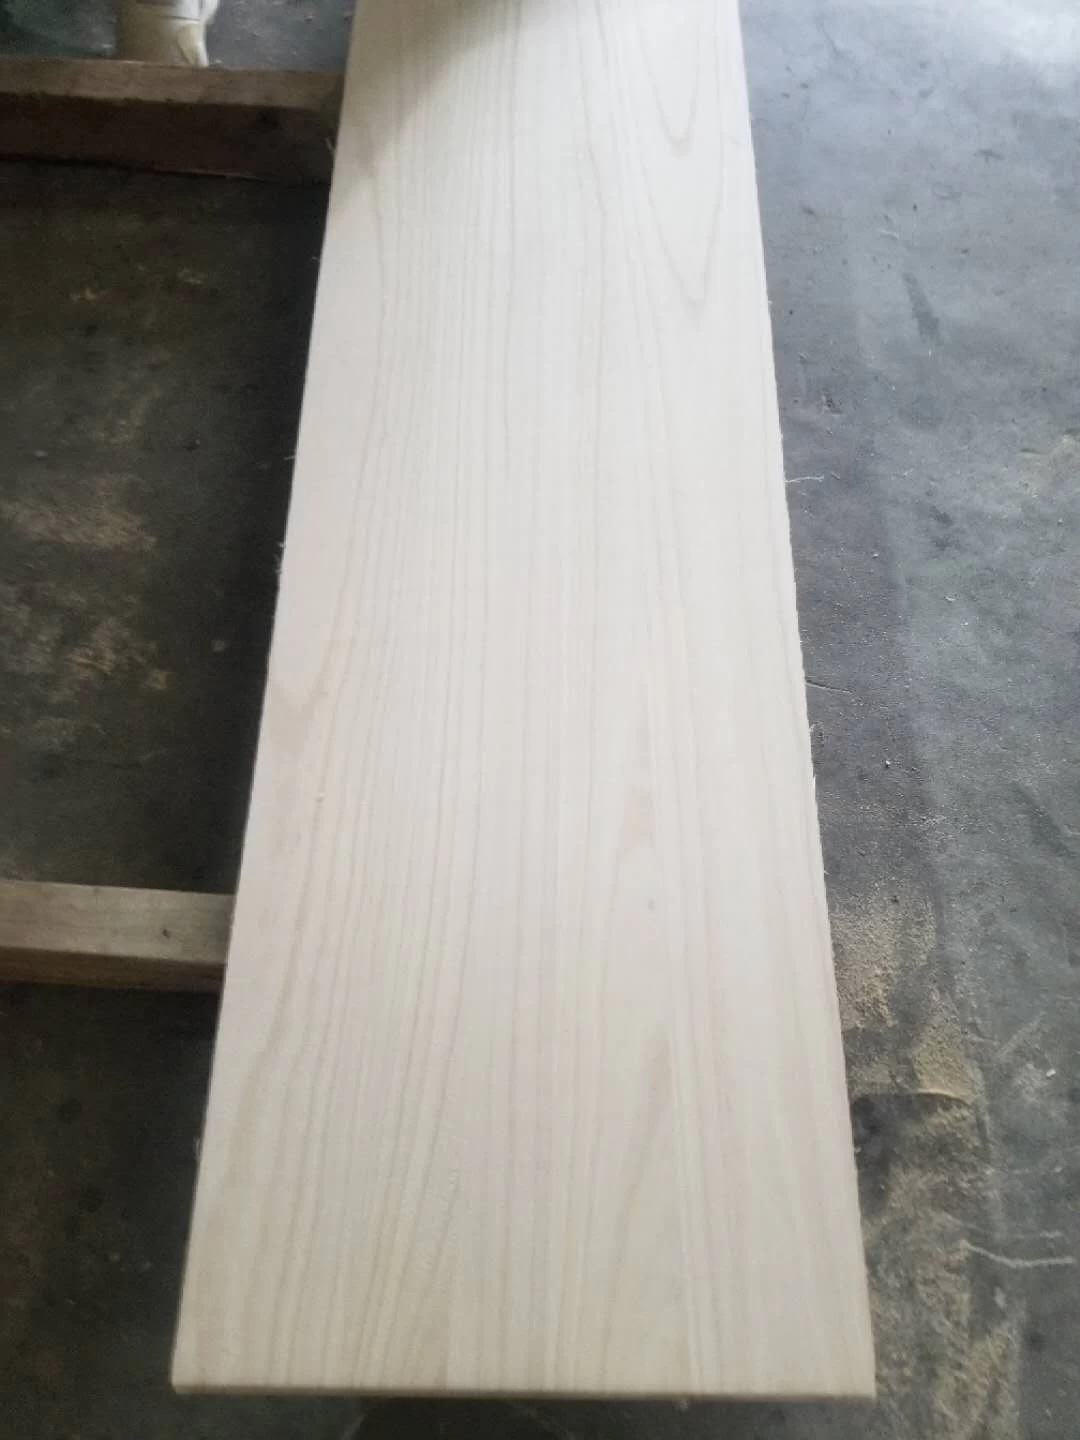 Big Size Paulownia Wood Board for Furniture Factory Price Paulownia Wood  Sheets Paulownia Wood Lumber for Sale - China Paulownia Wood Board,  Building Material